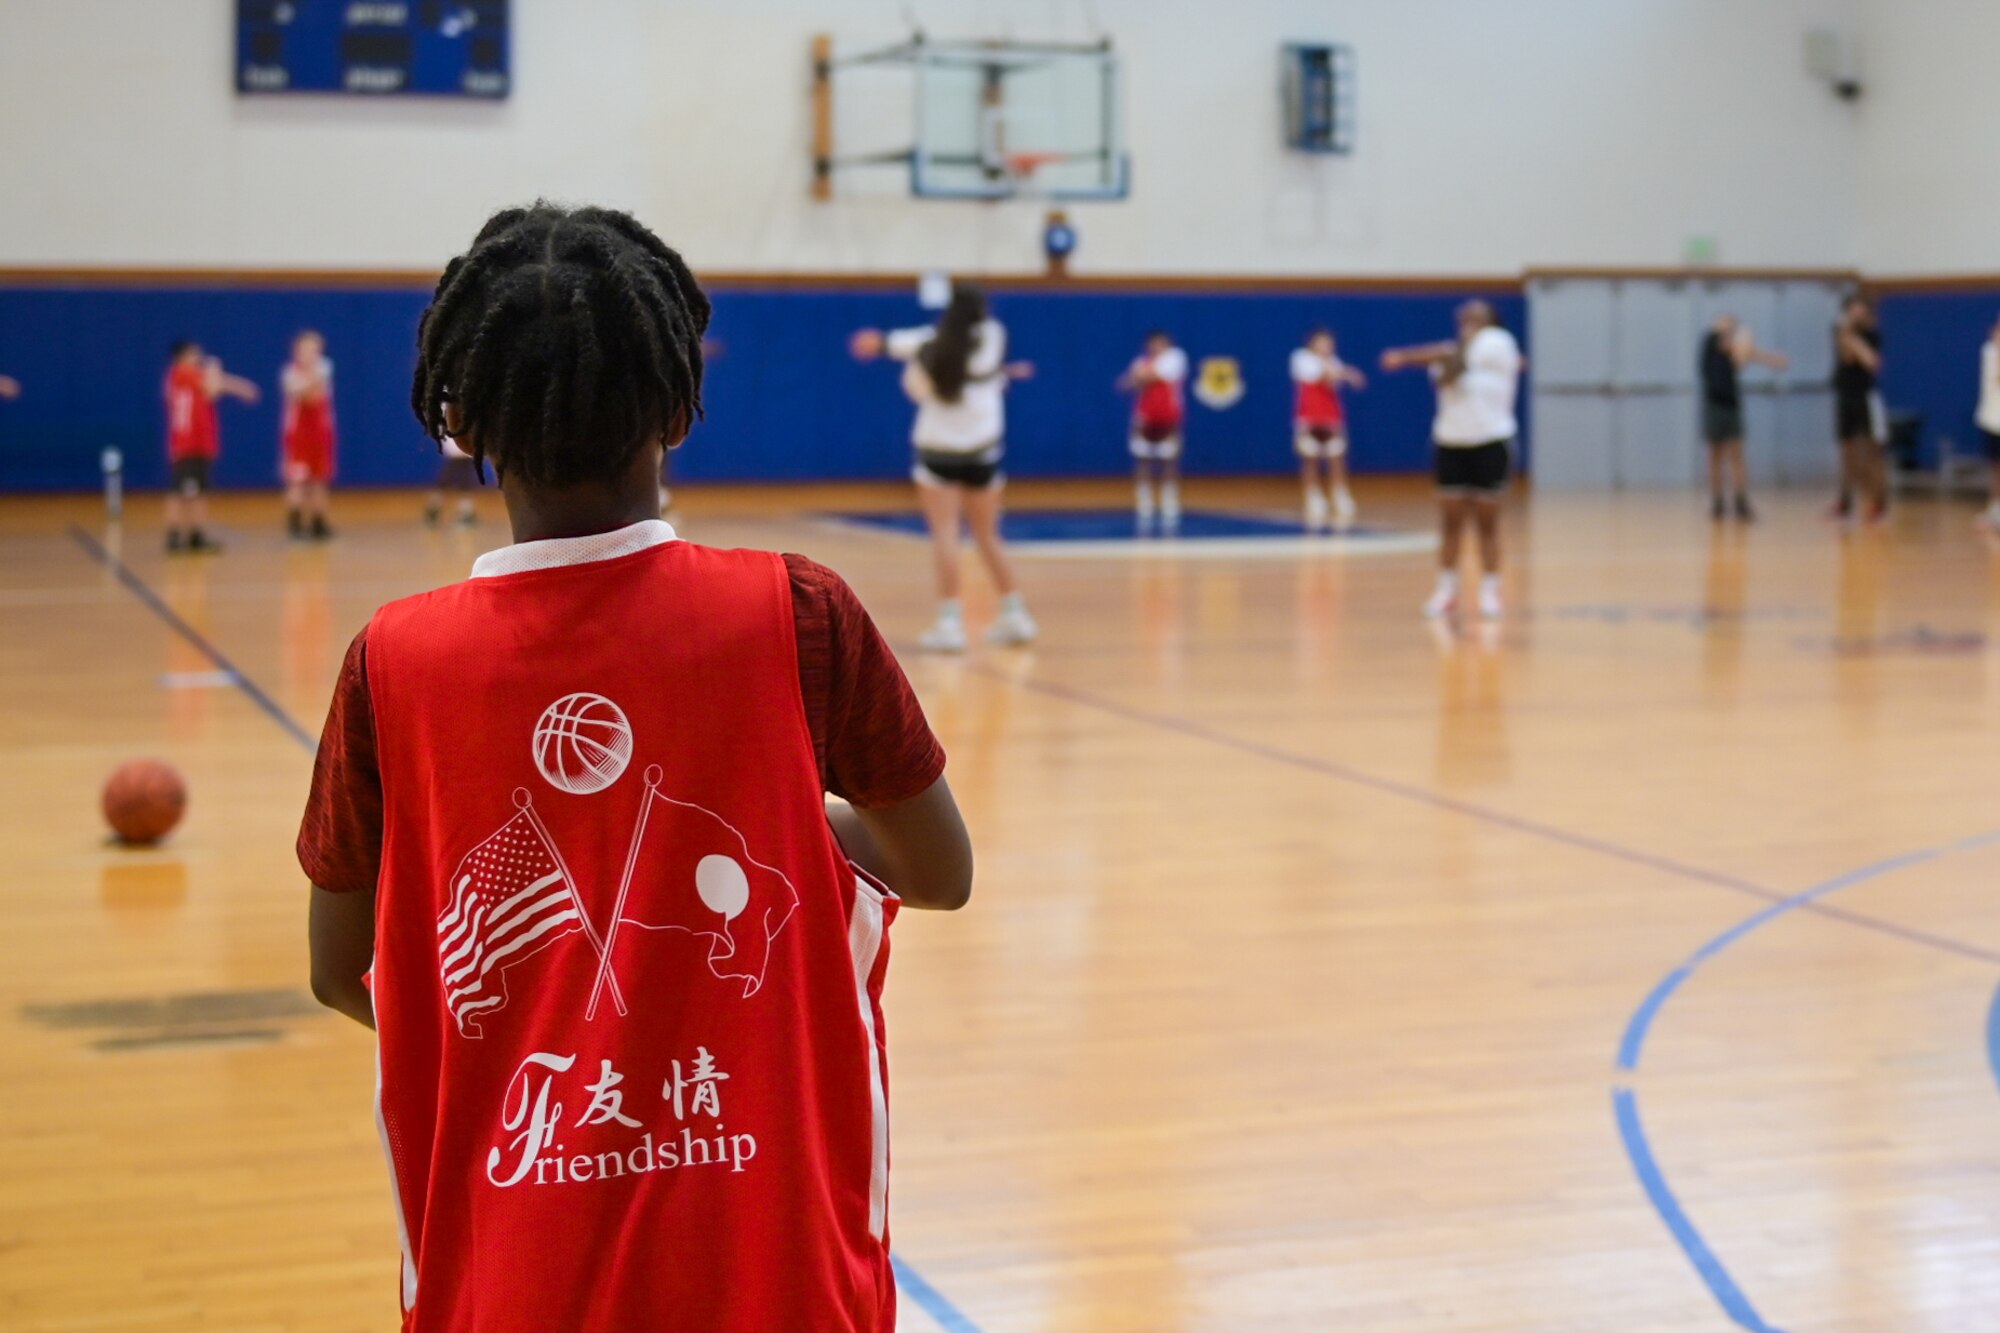 Child wears a basketball jersey